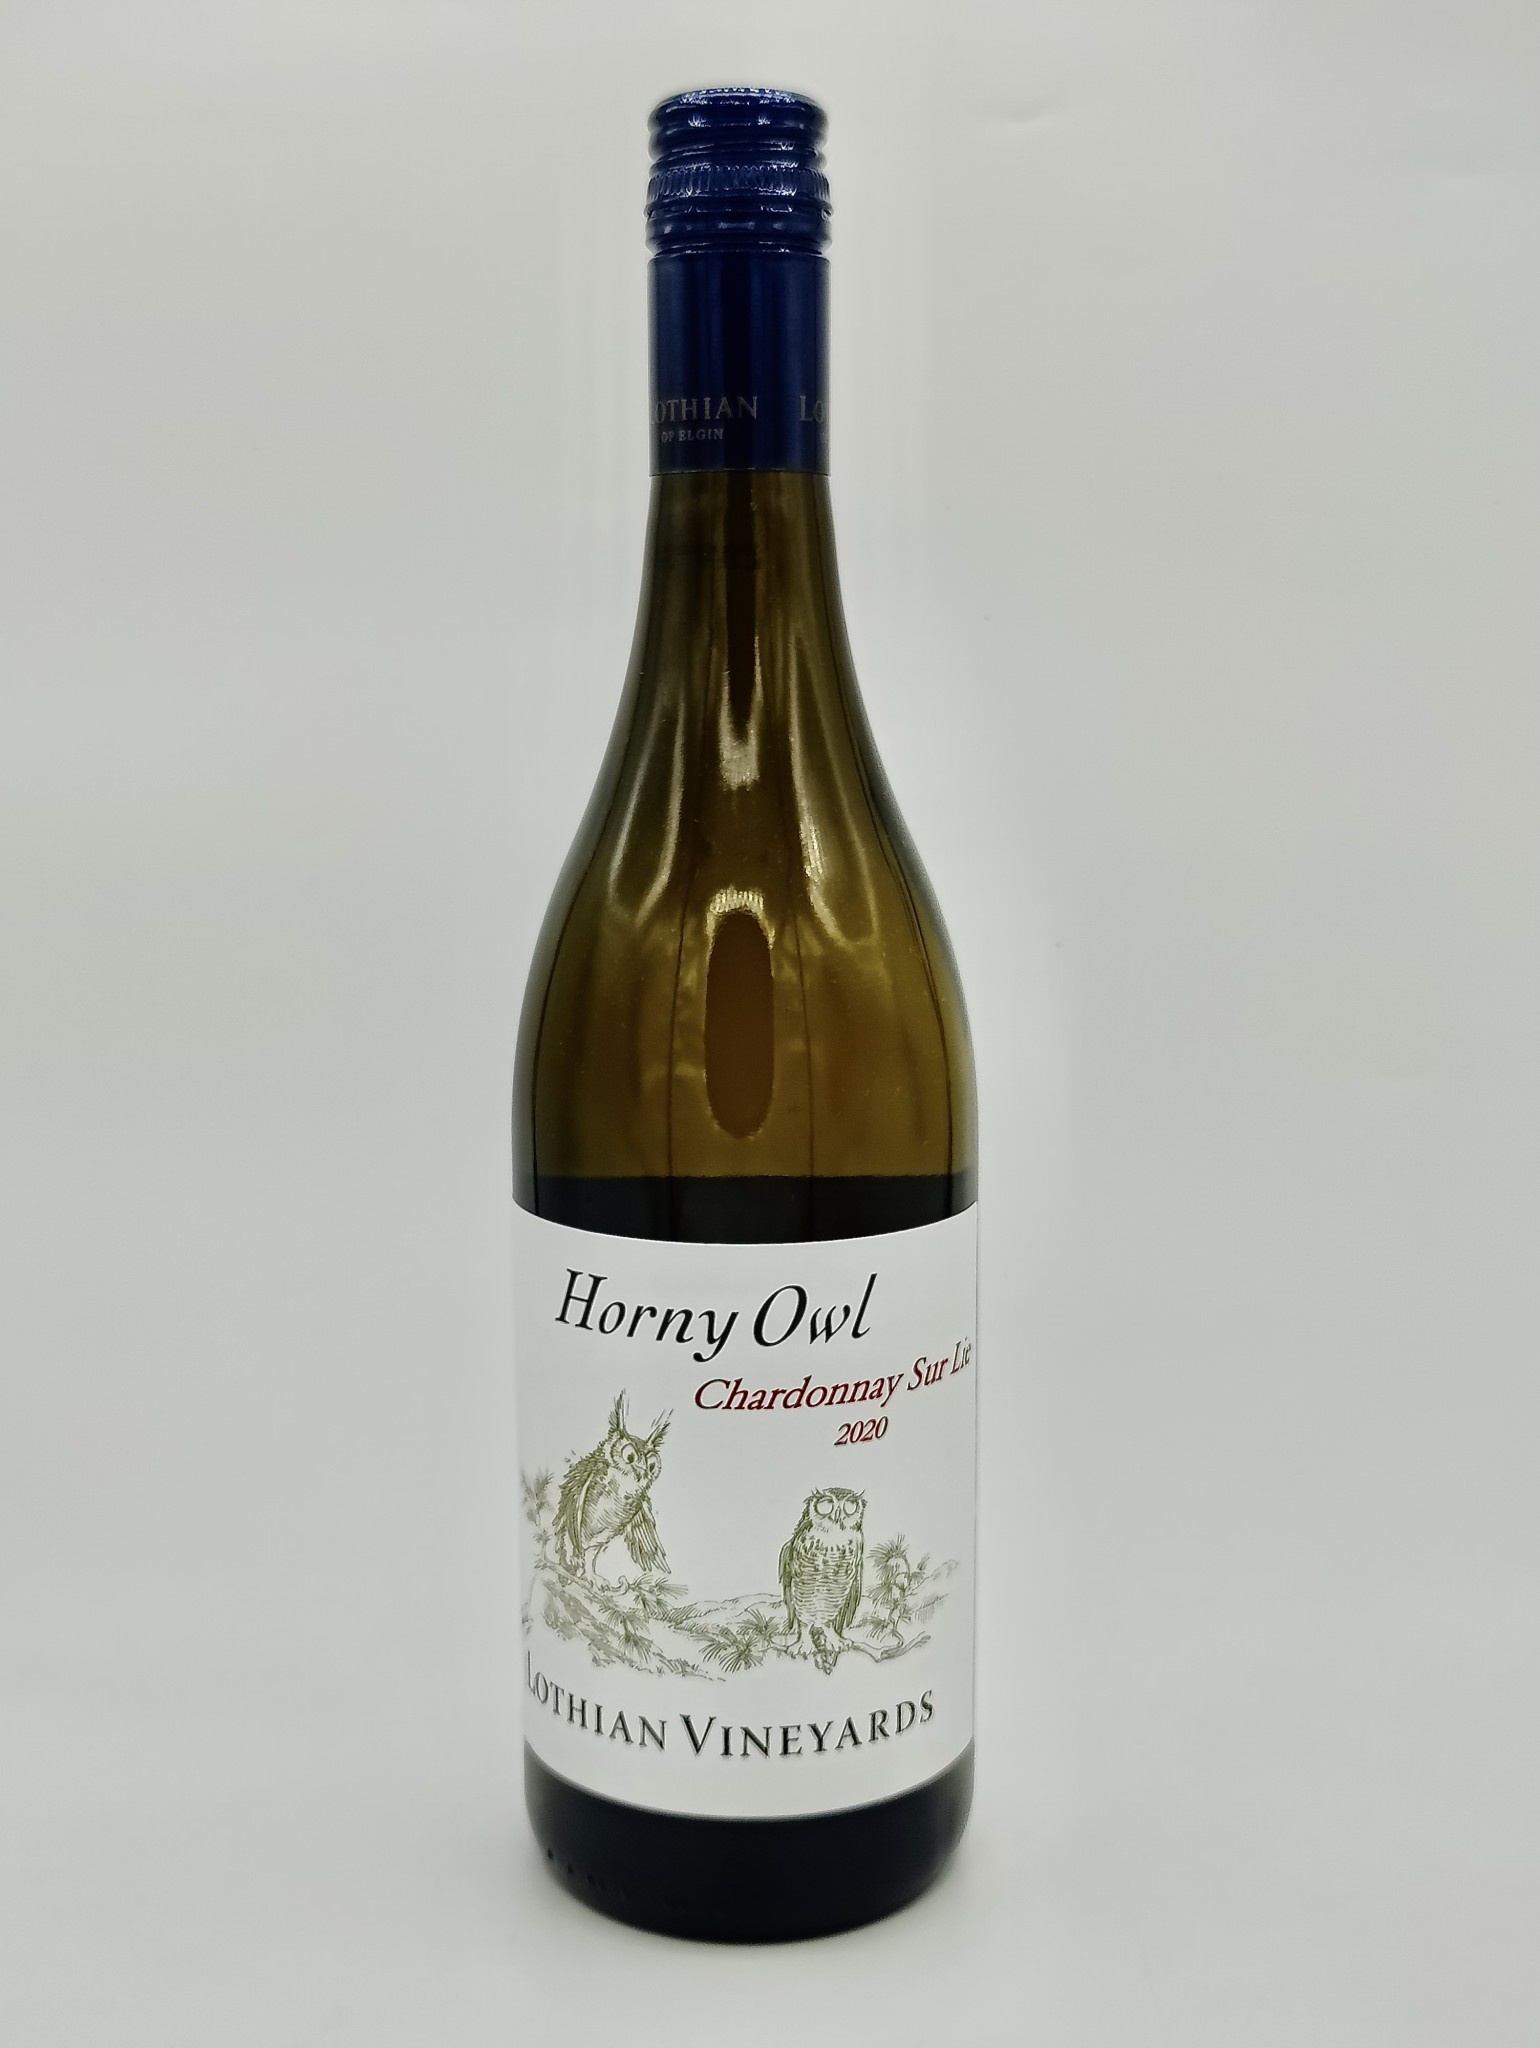 Elgin Chardonnay "Horny Owl" 2020 Lothian Vineyards 750ml